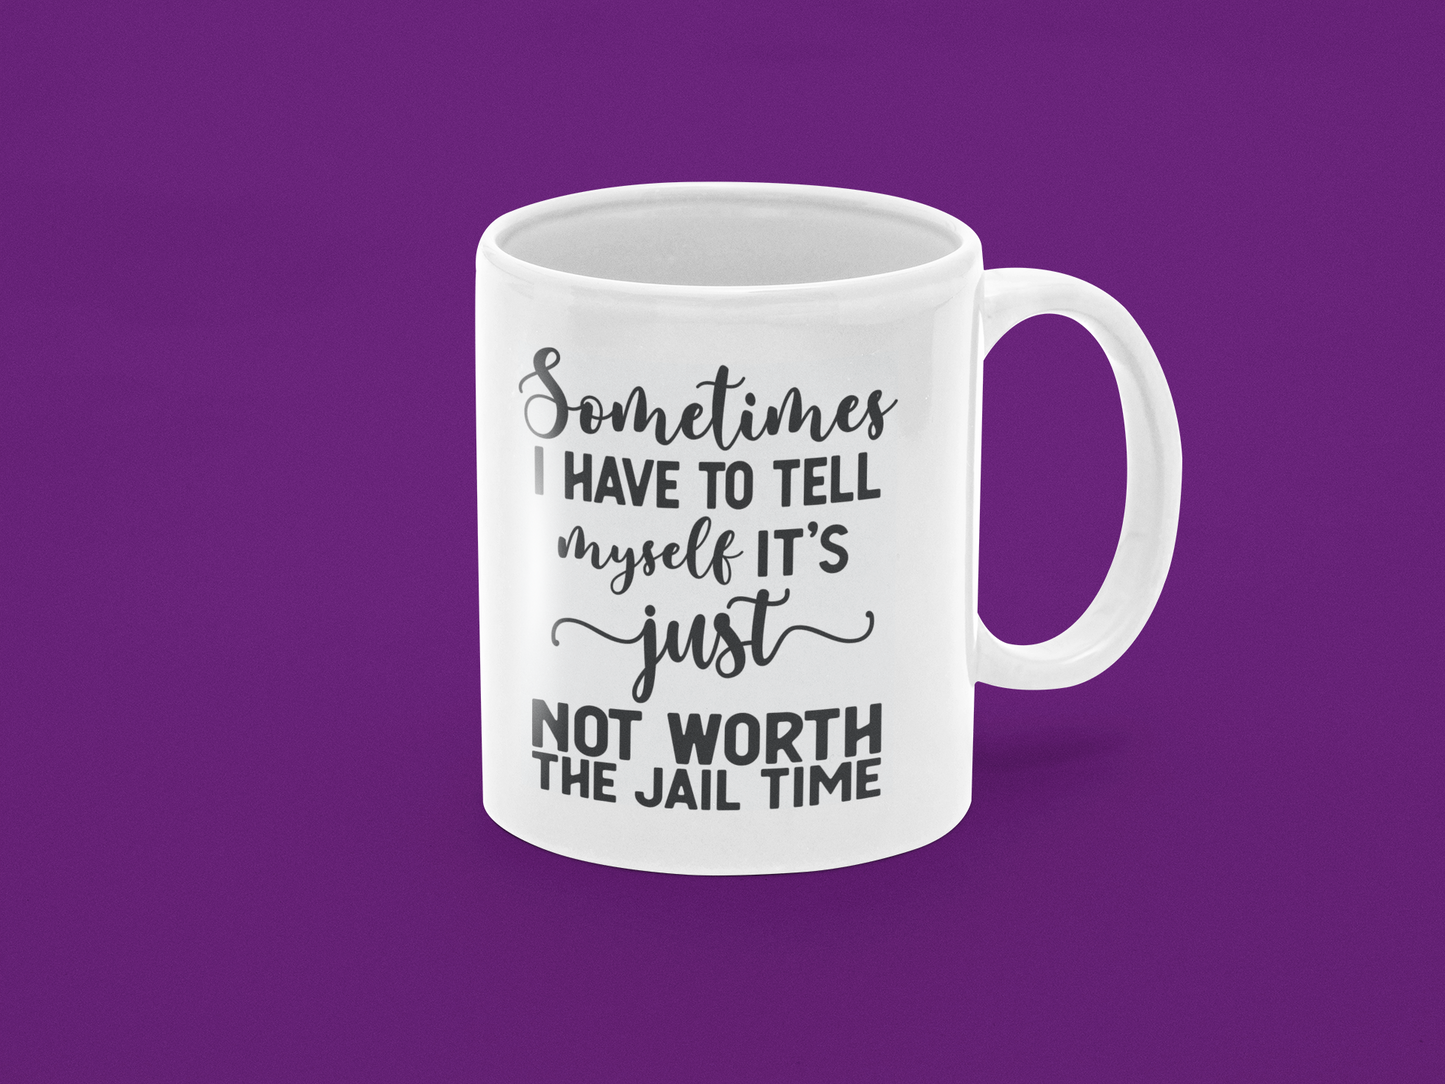 Not Worth the Jail Time! Coffee Mug